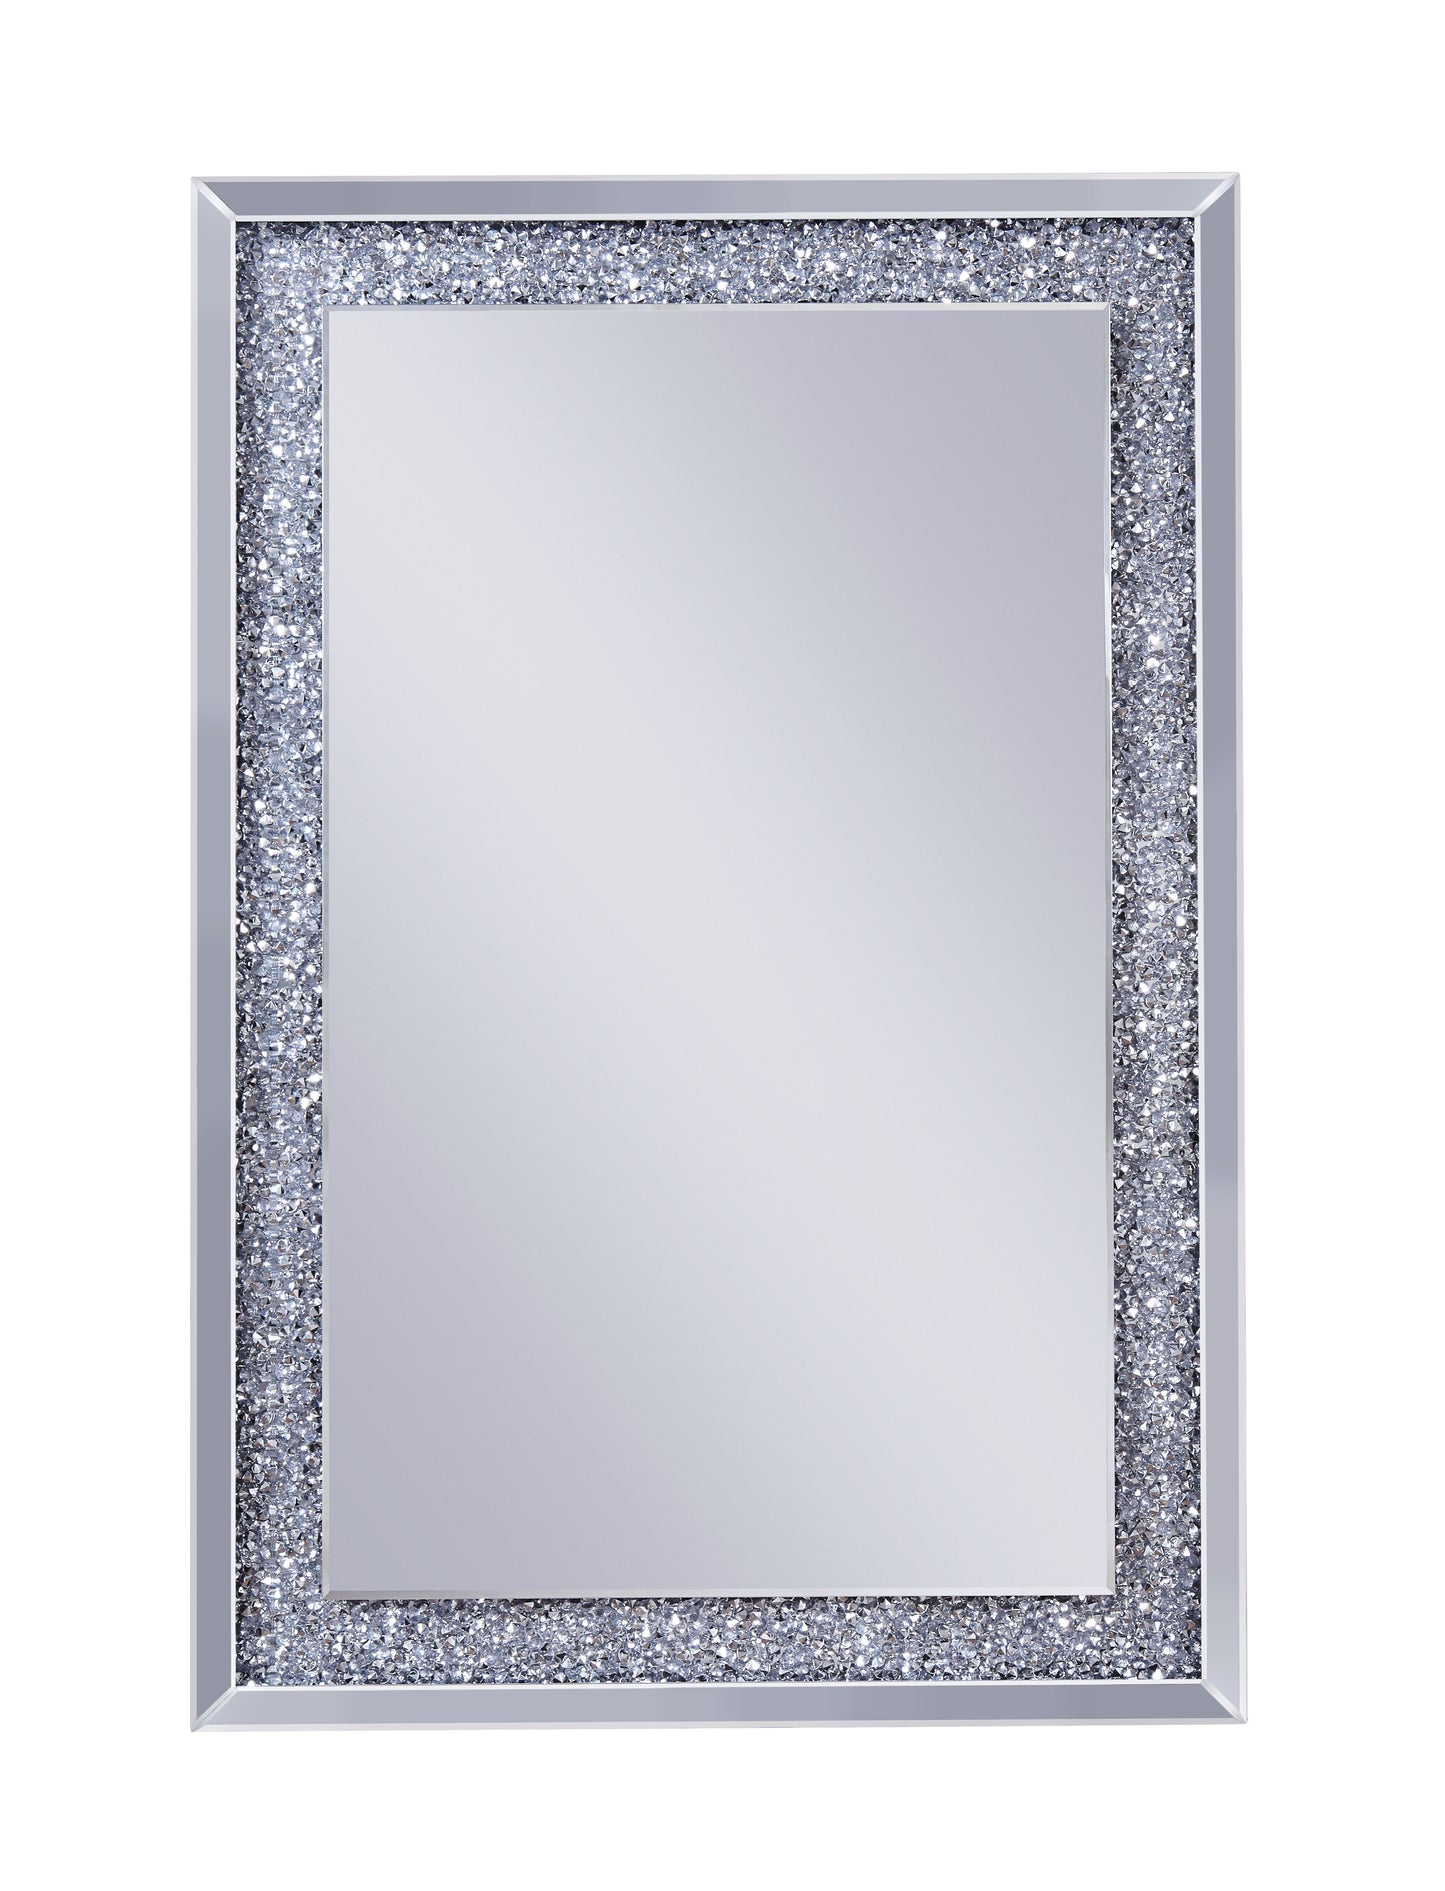 Beautiful Wall Decor Mirror with  Faux Diamonds